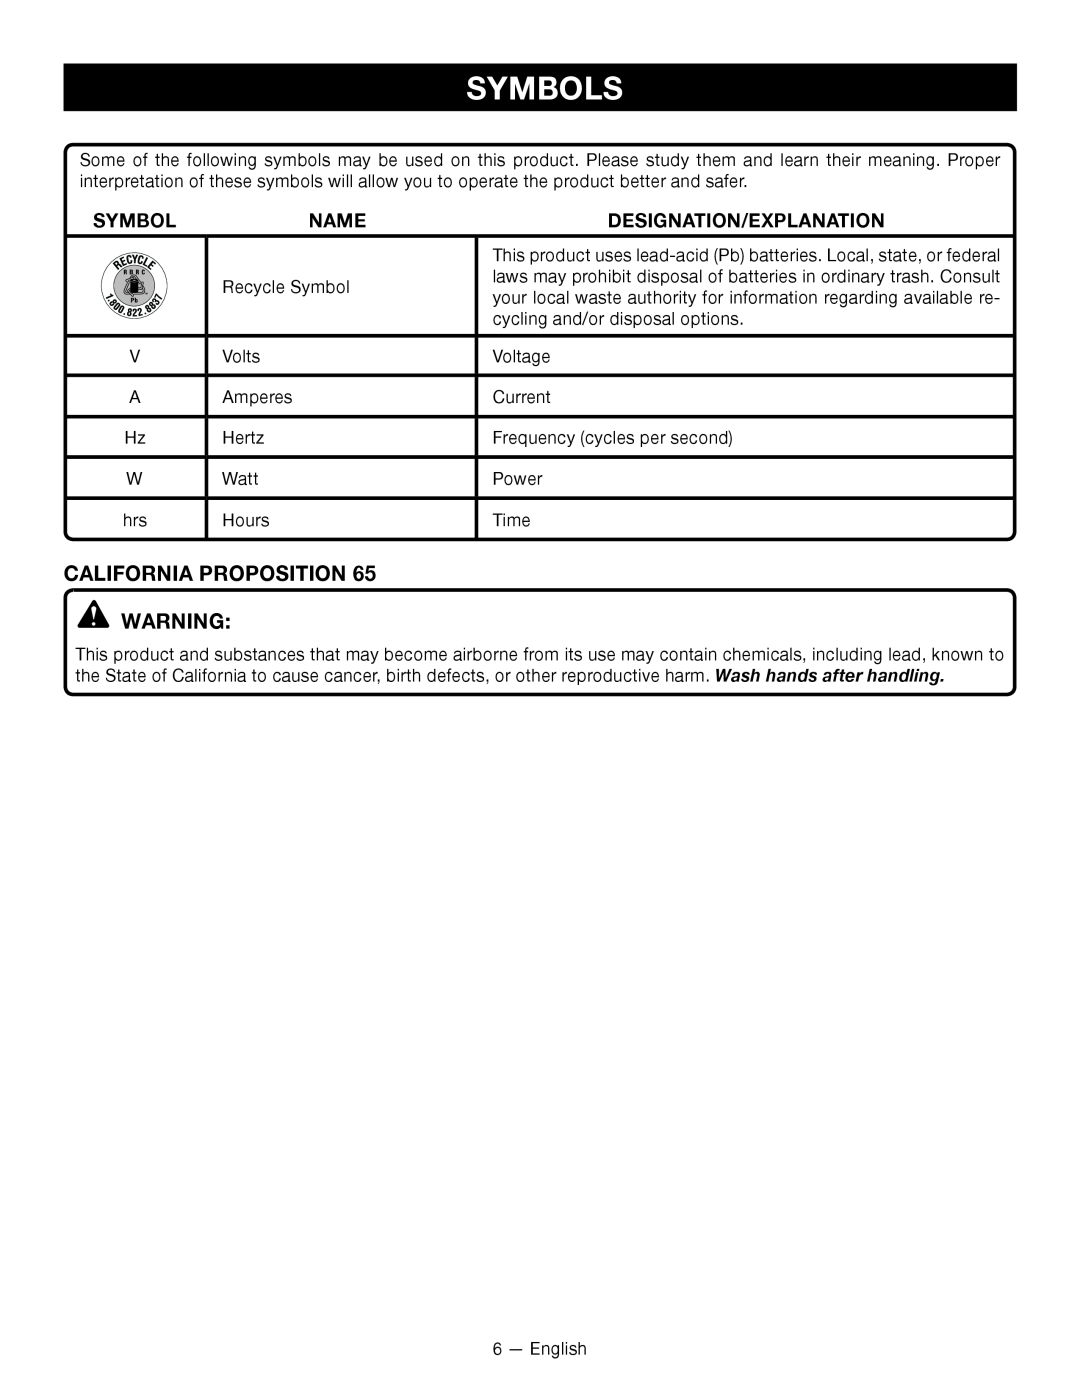 Ryobi RY14110 manuel dutilisation California Proposition, Symbols, Name, Designation/Explanation 